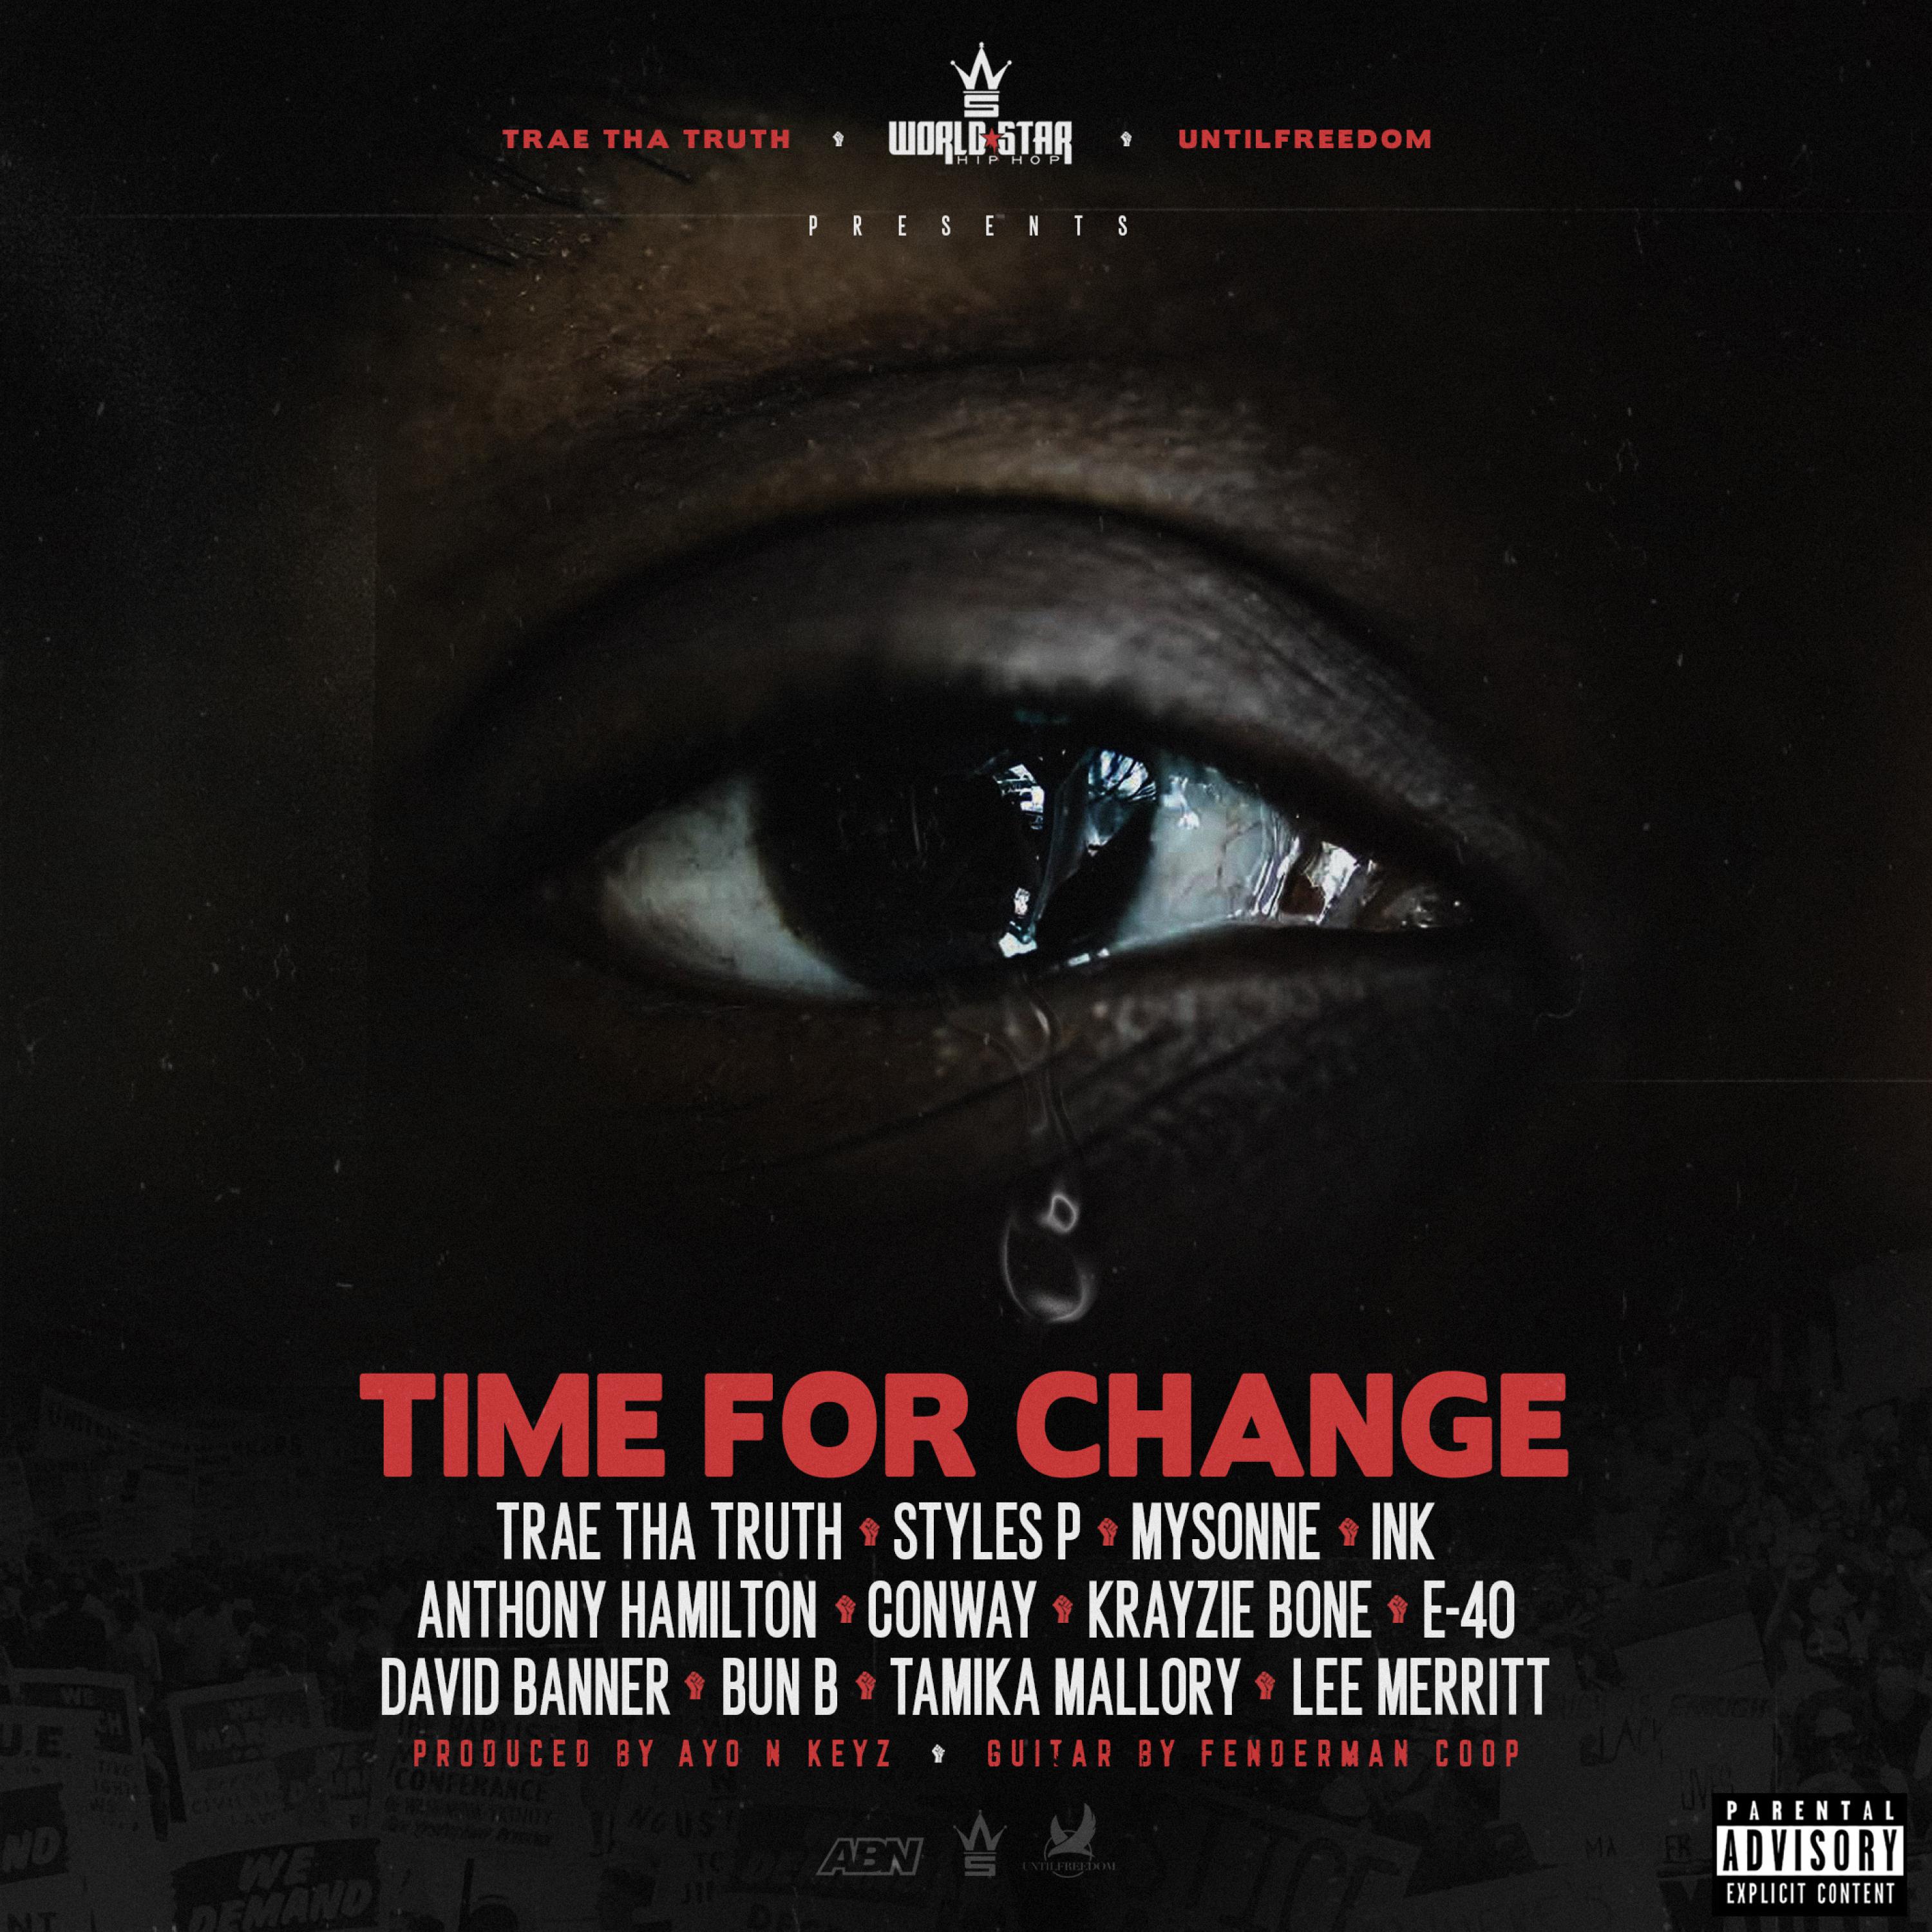 Trae Tha Truth - Time for Change (Black Lives Matter)